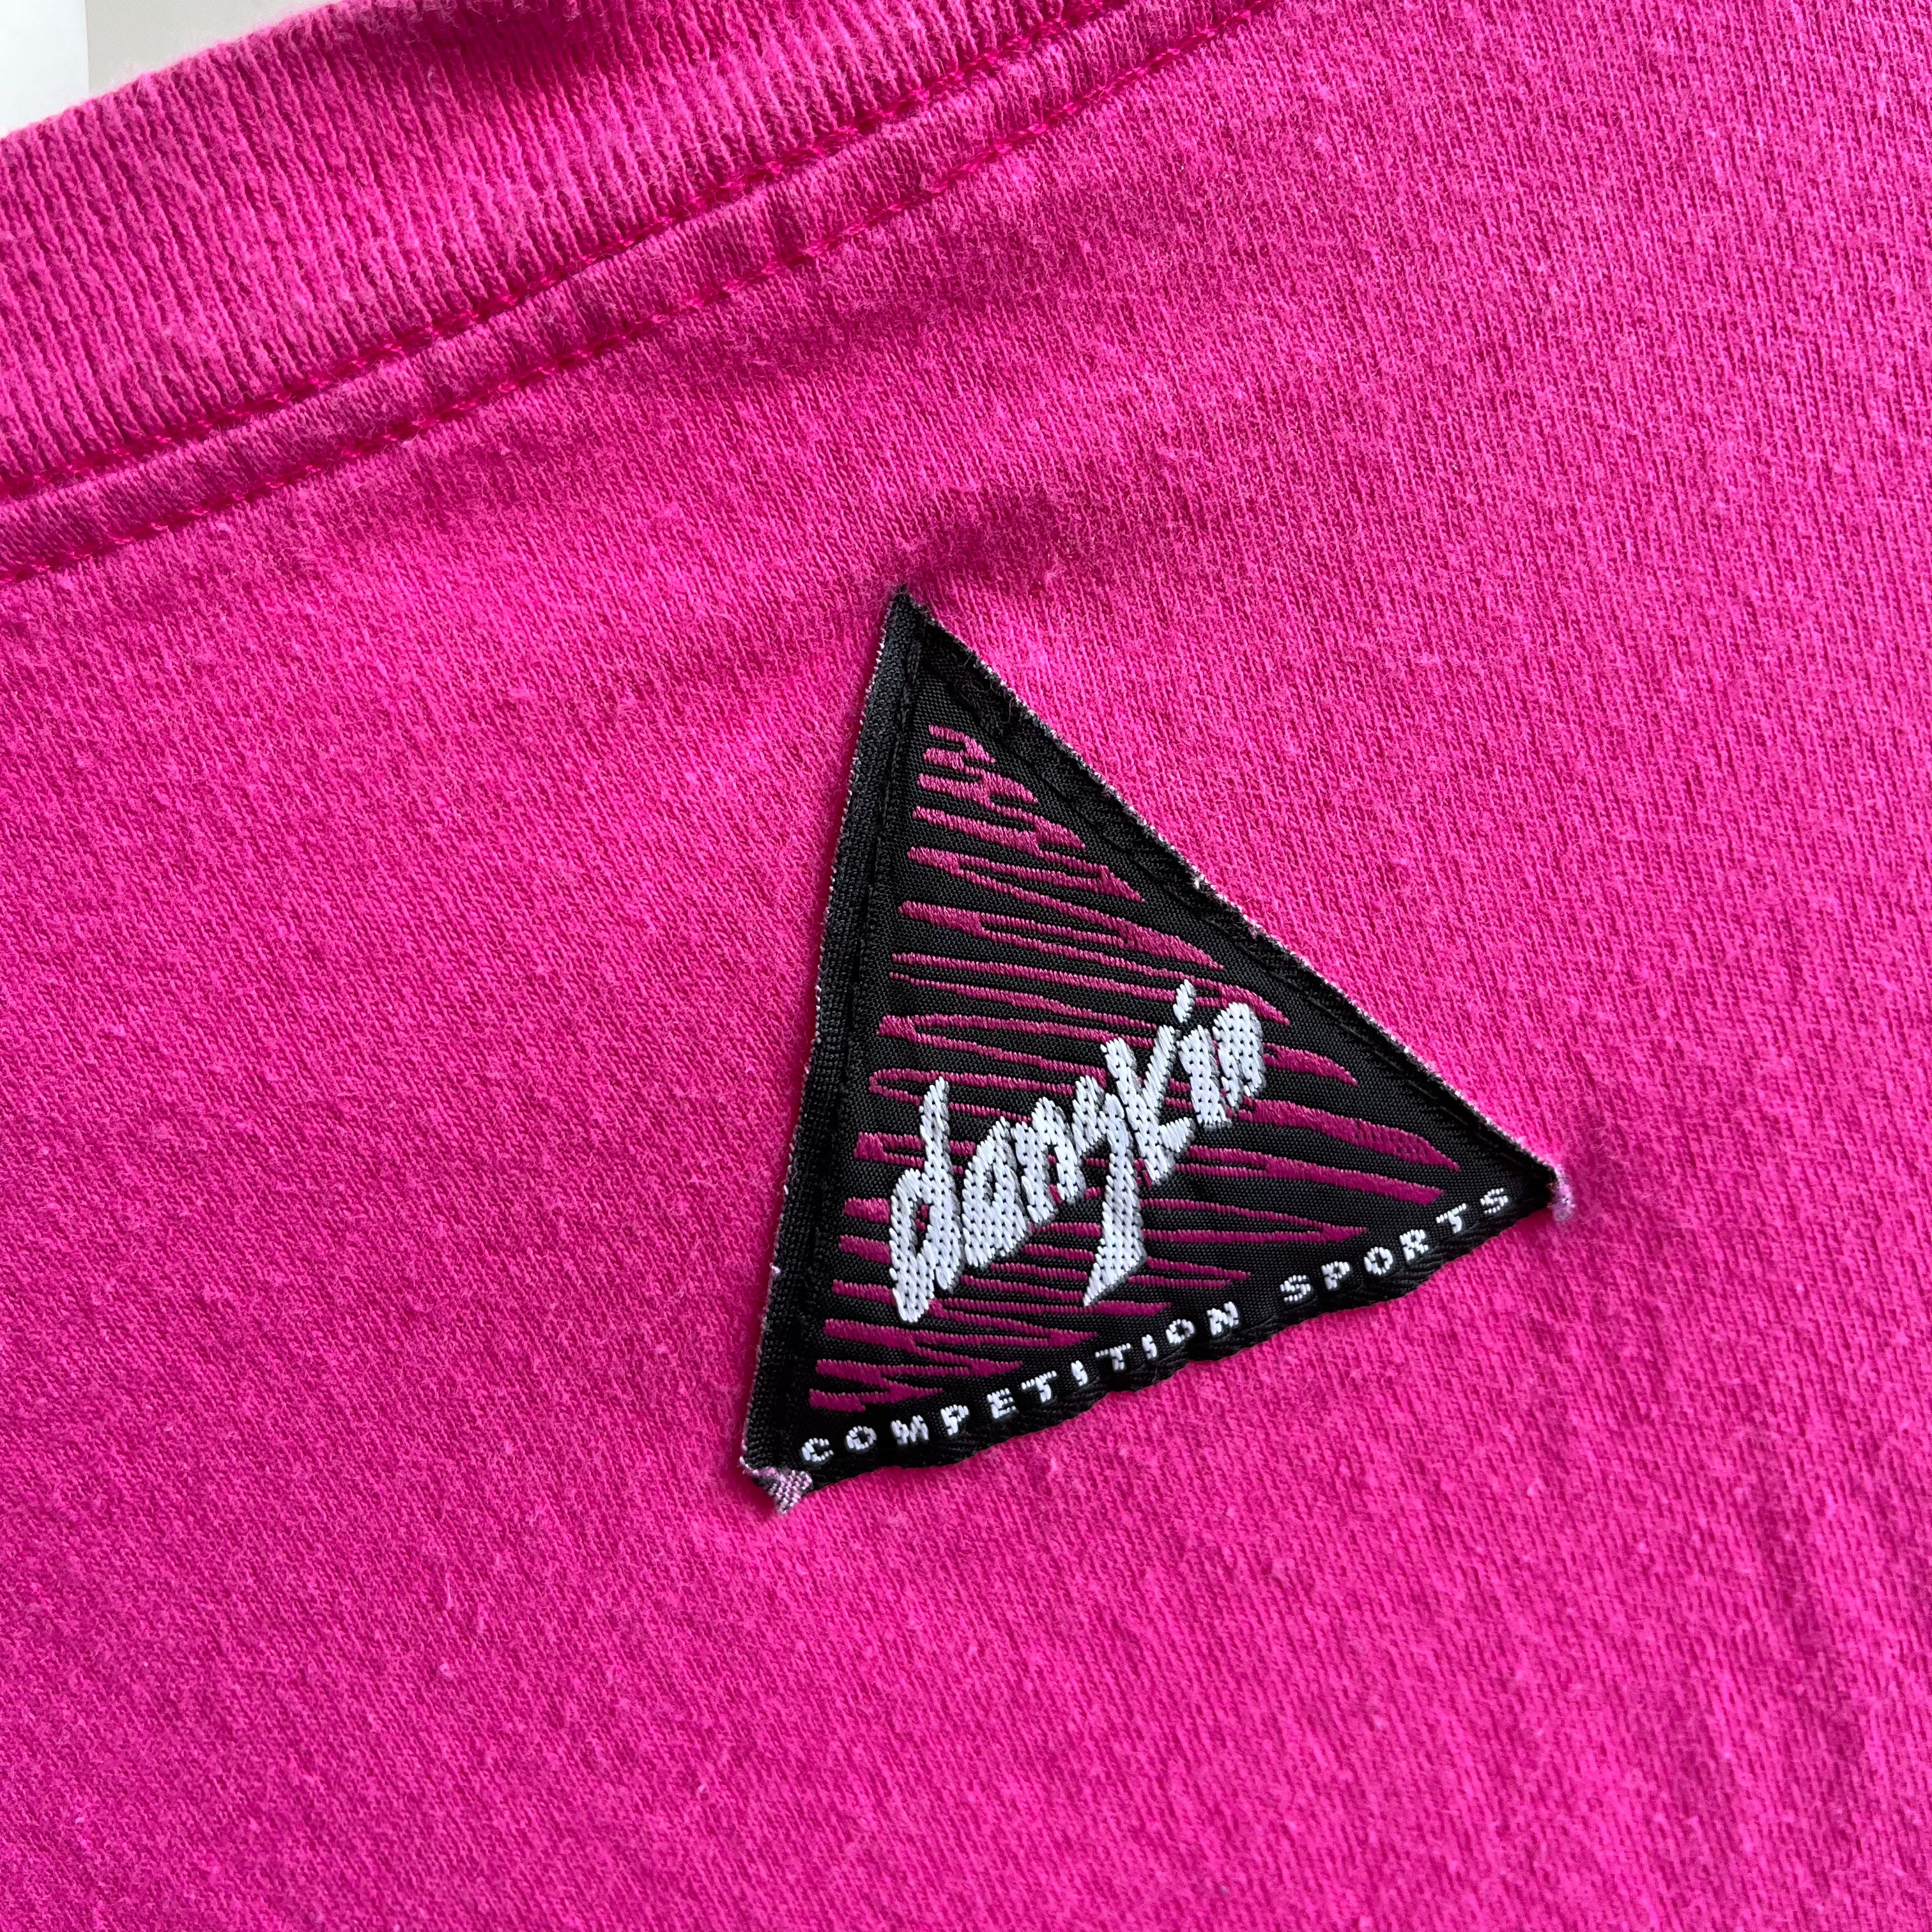 1980s Danskin Hot Pink T-Shirt